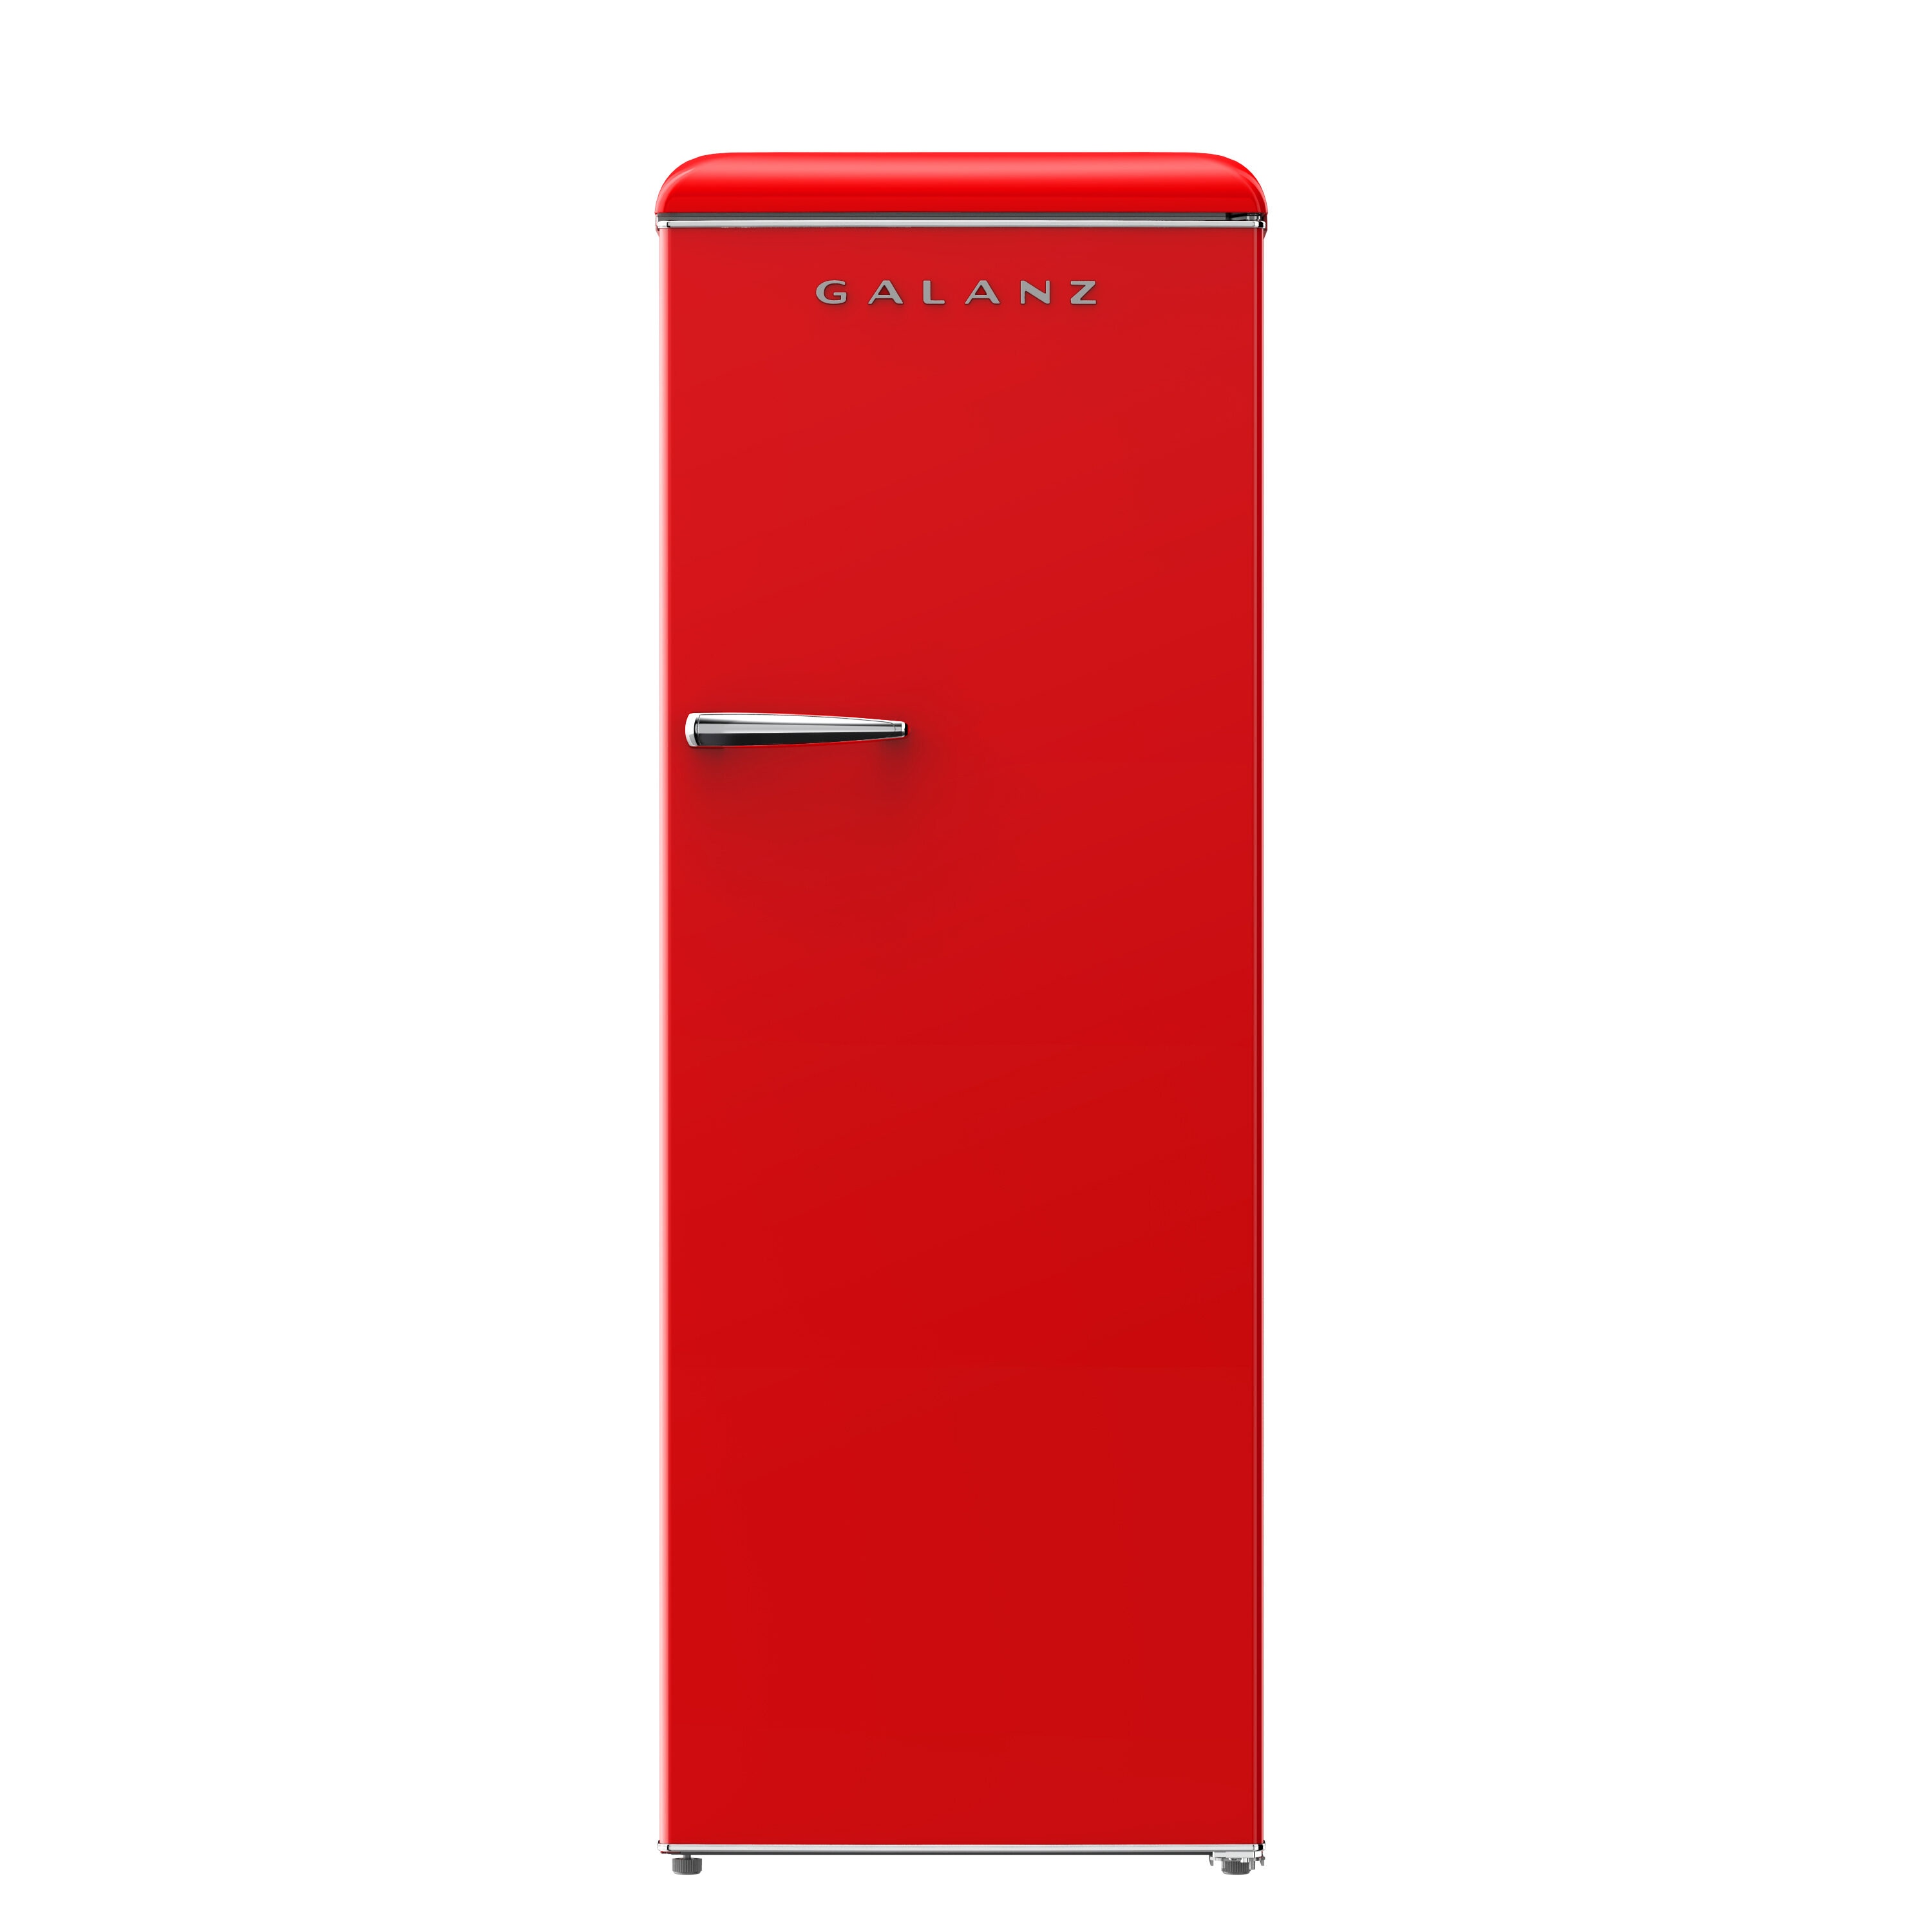 Galanz Retro 10-cu ft Top-Freezer Refrigerator (Hot rod red) ENERGY STAR at